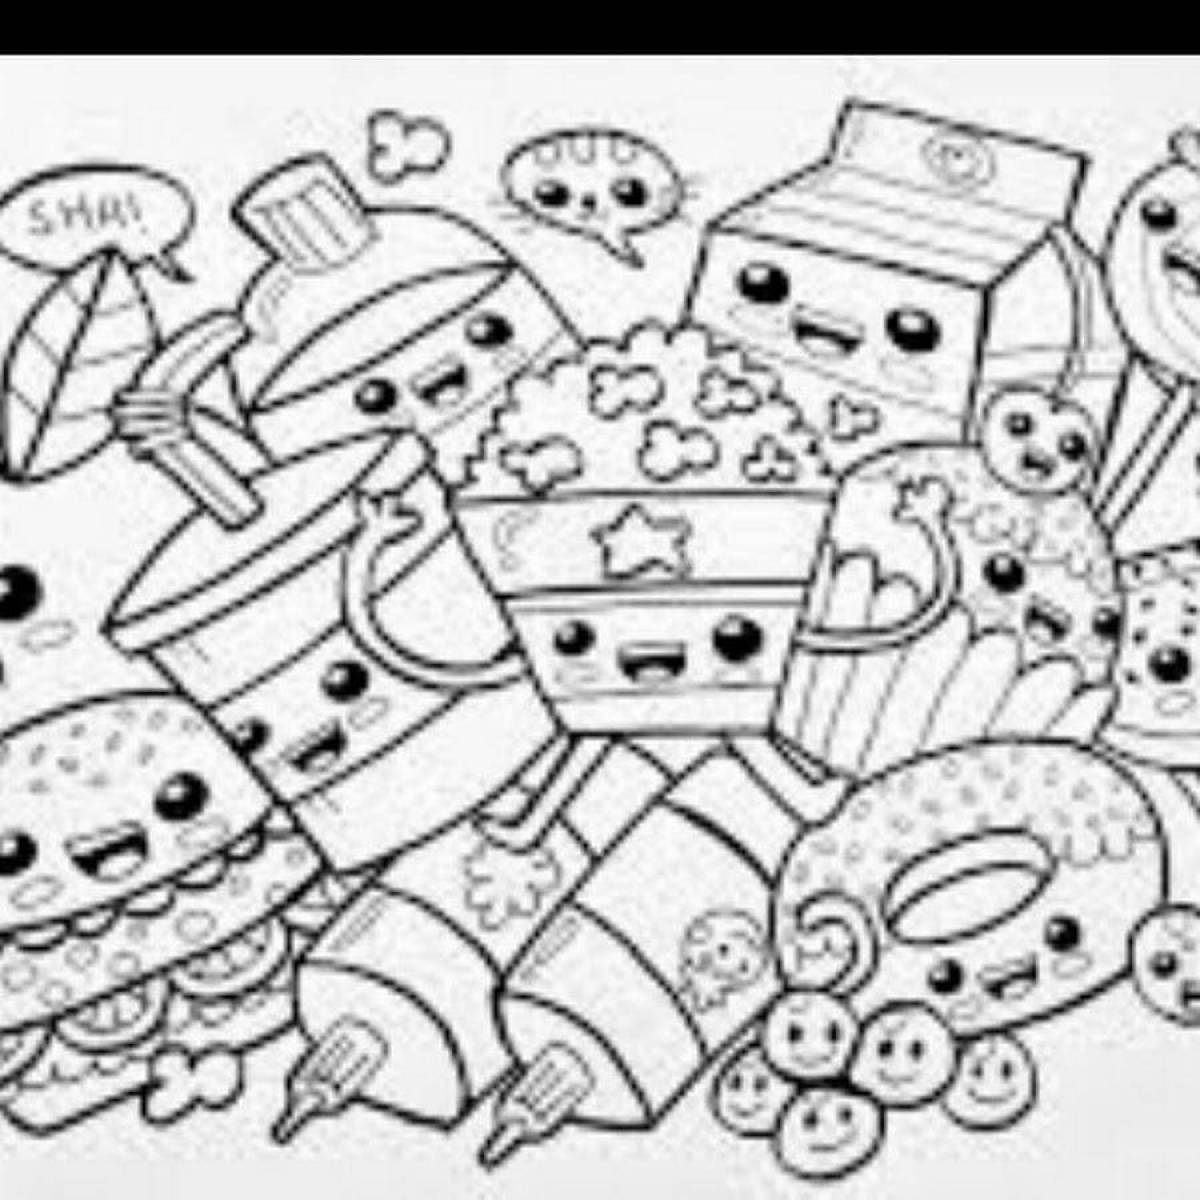 Exciting kawaii food coloring page